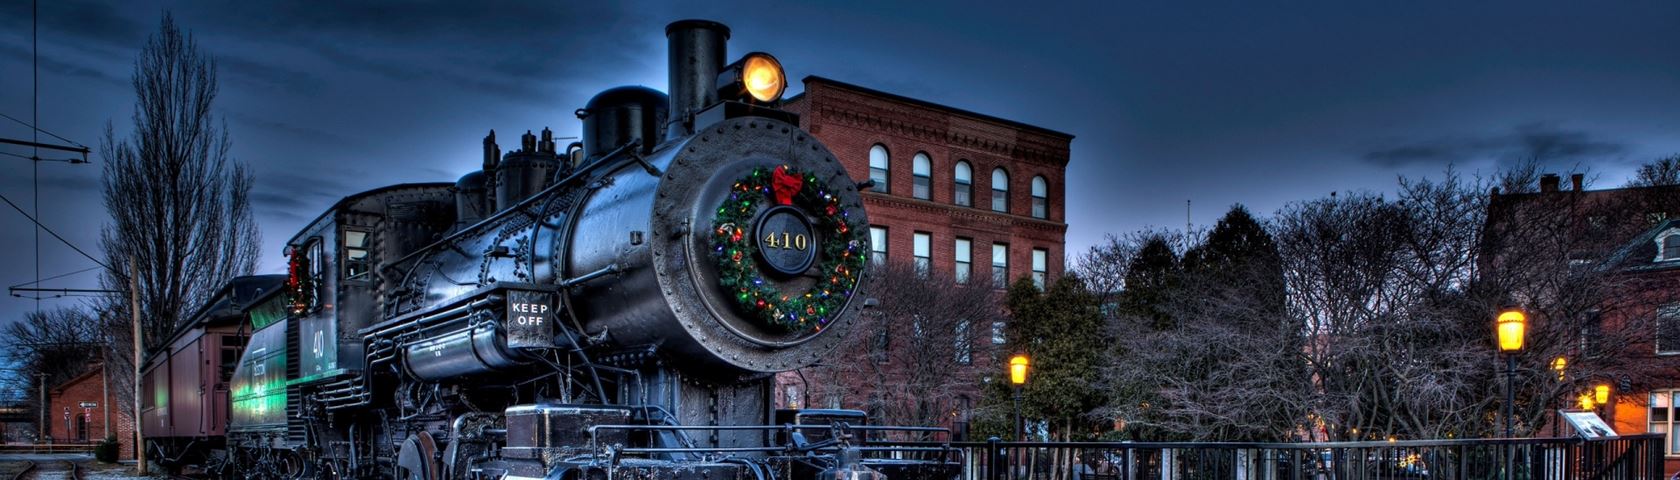 Christmas City Locomotive